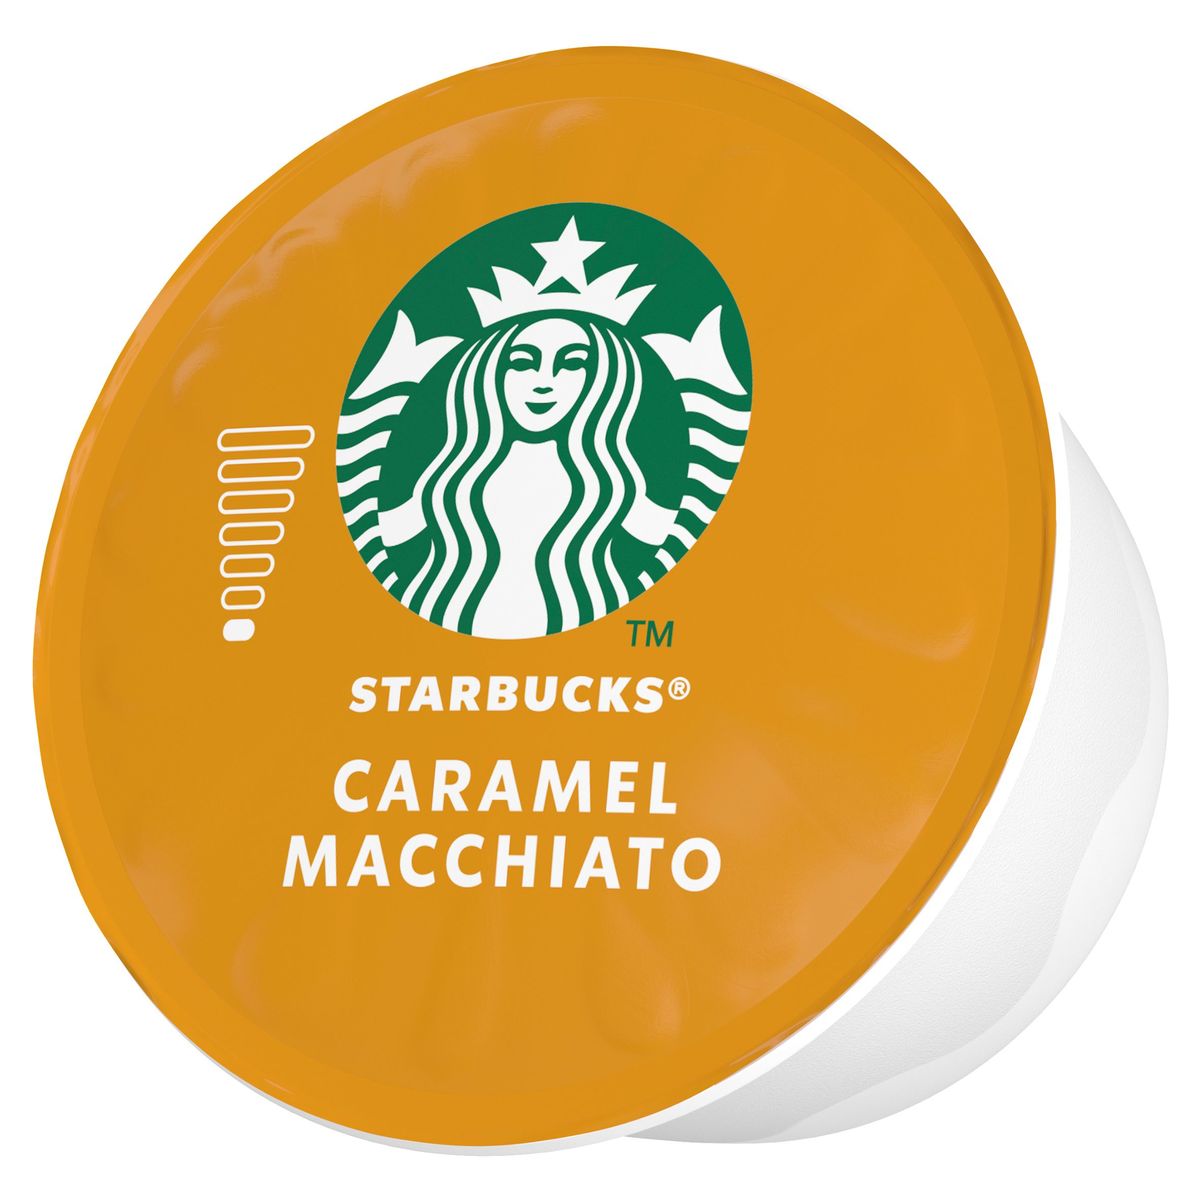 Starbucks by Nescafé Dolce Gusto Caramel Macchiato 12Caps 3x127.8g